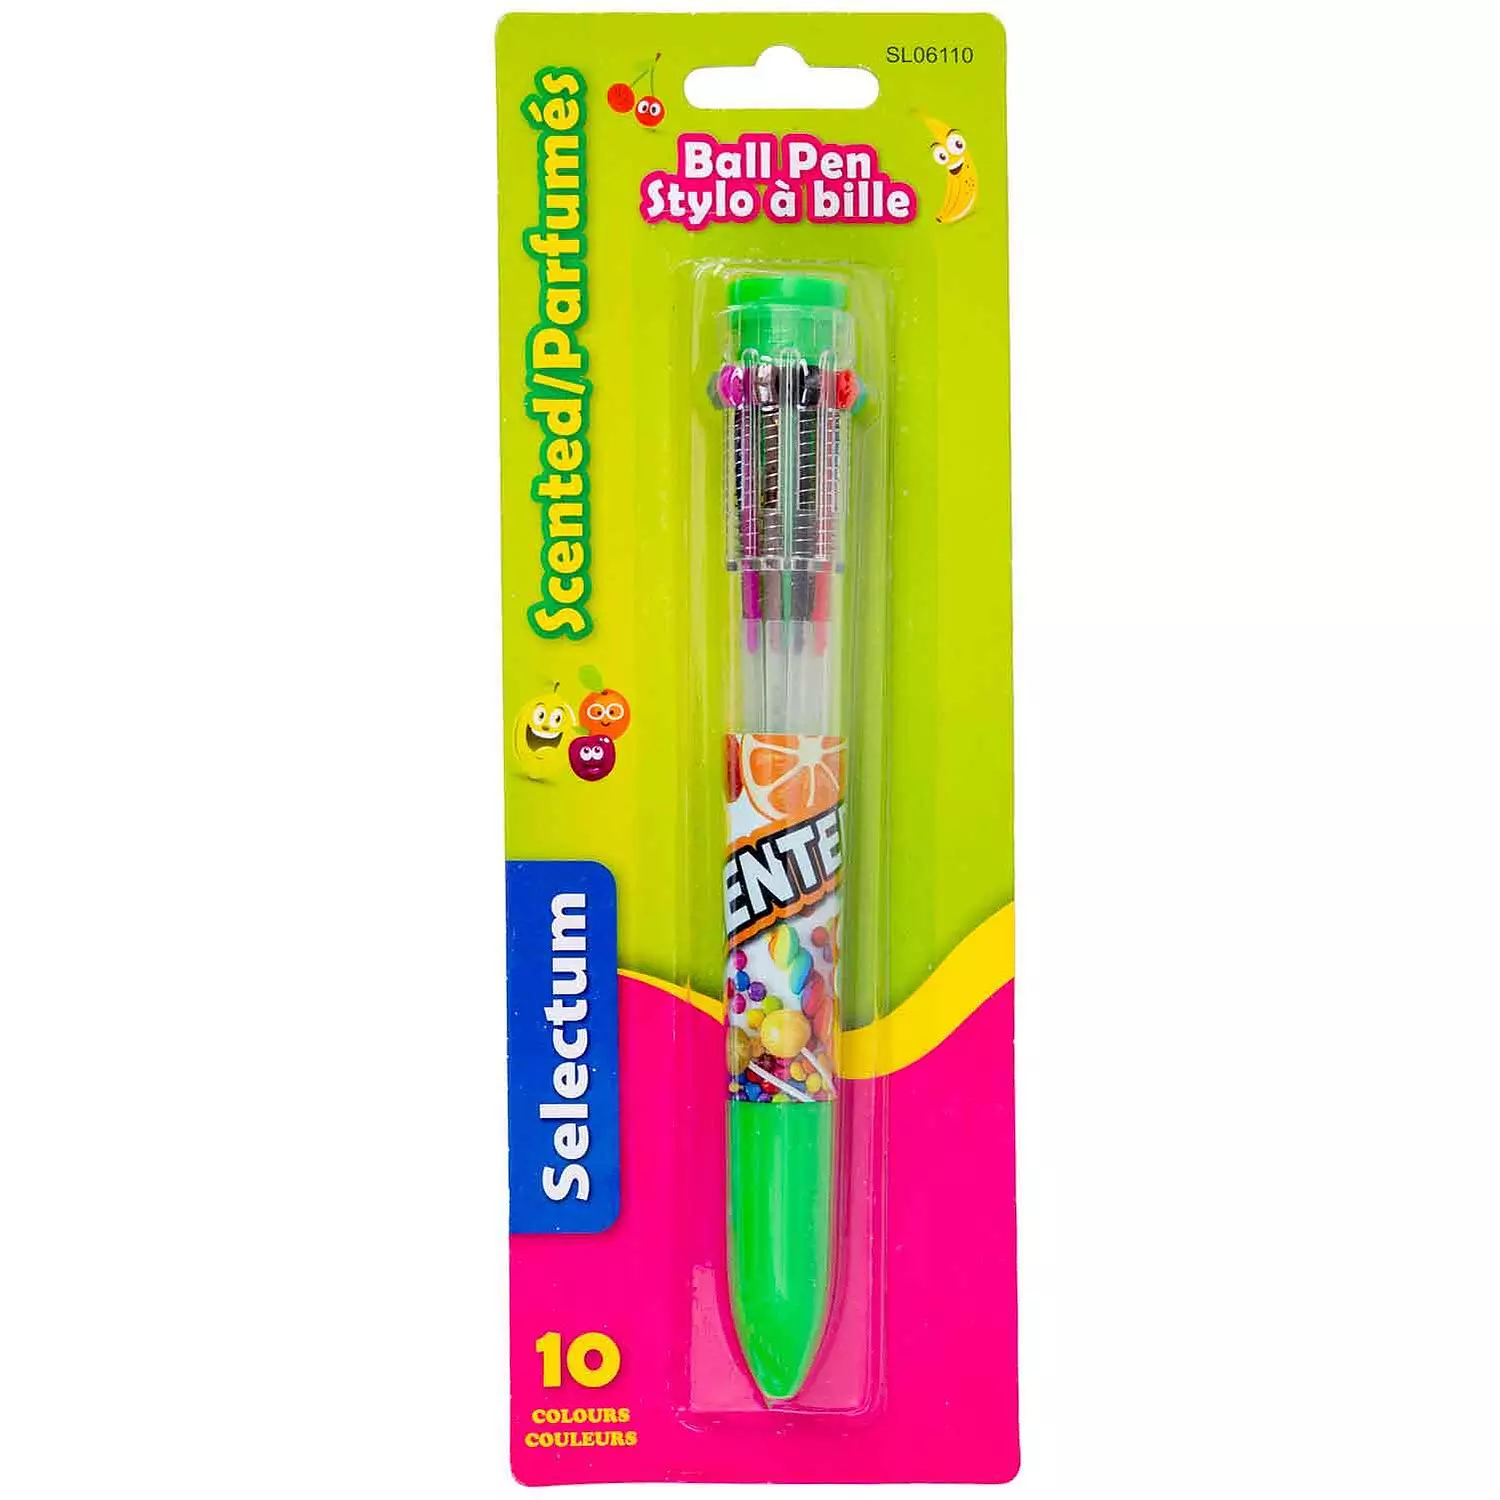 Scented 10 colour ballpoint pen